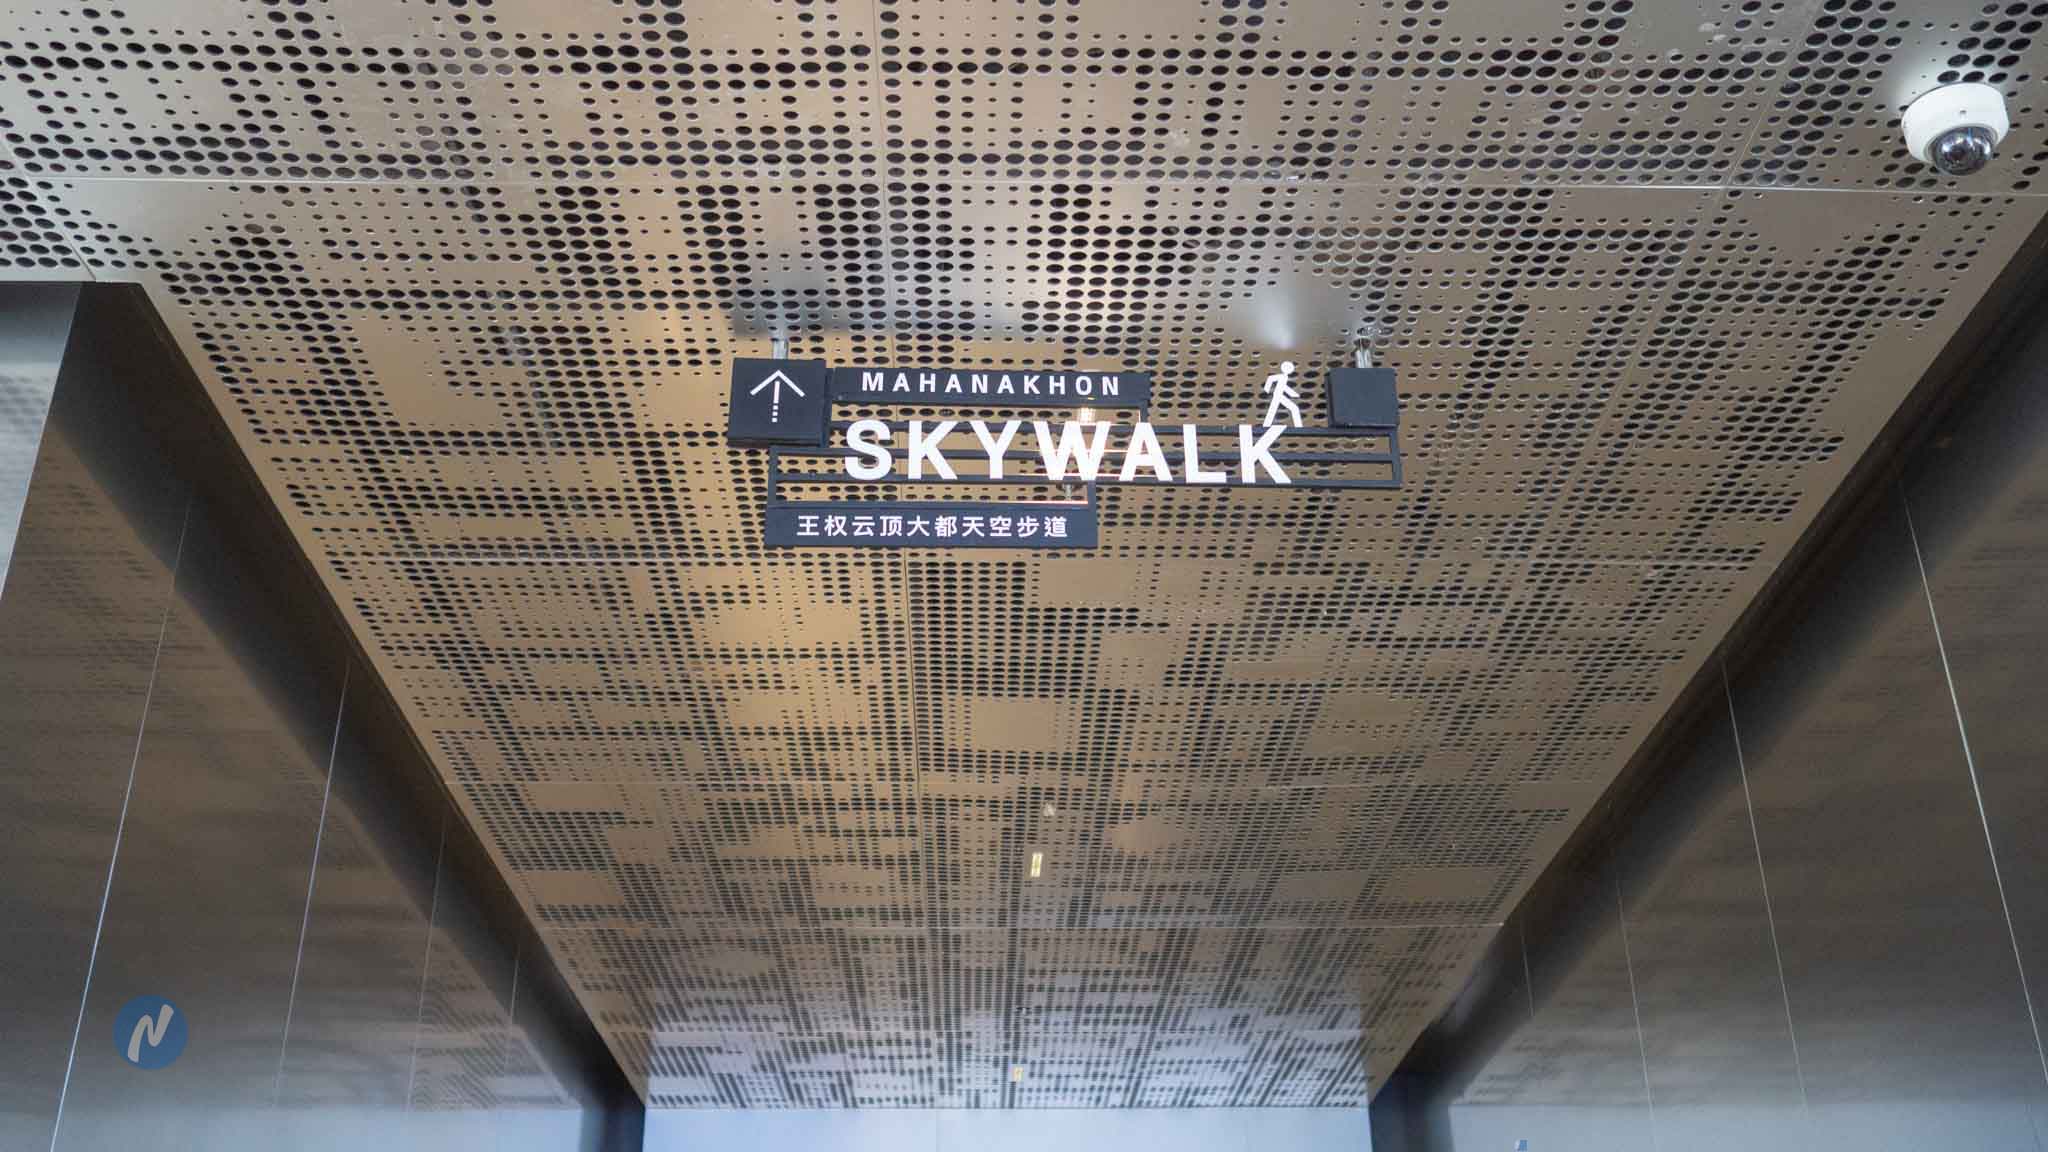 Mahanakhon Skywalk